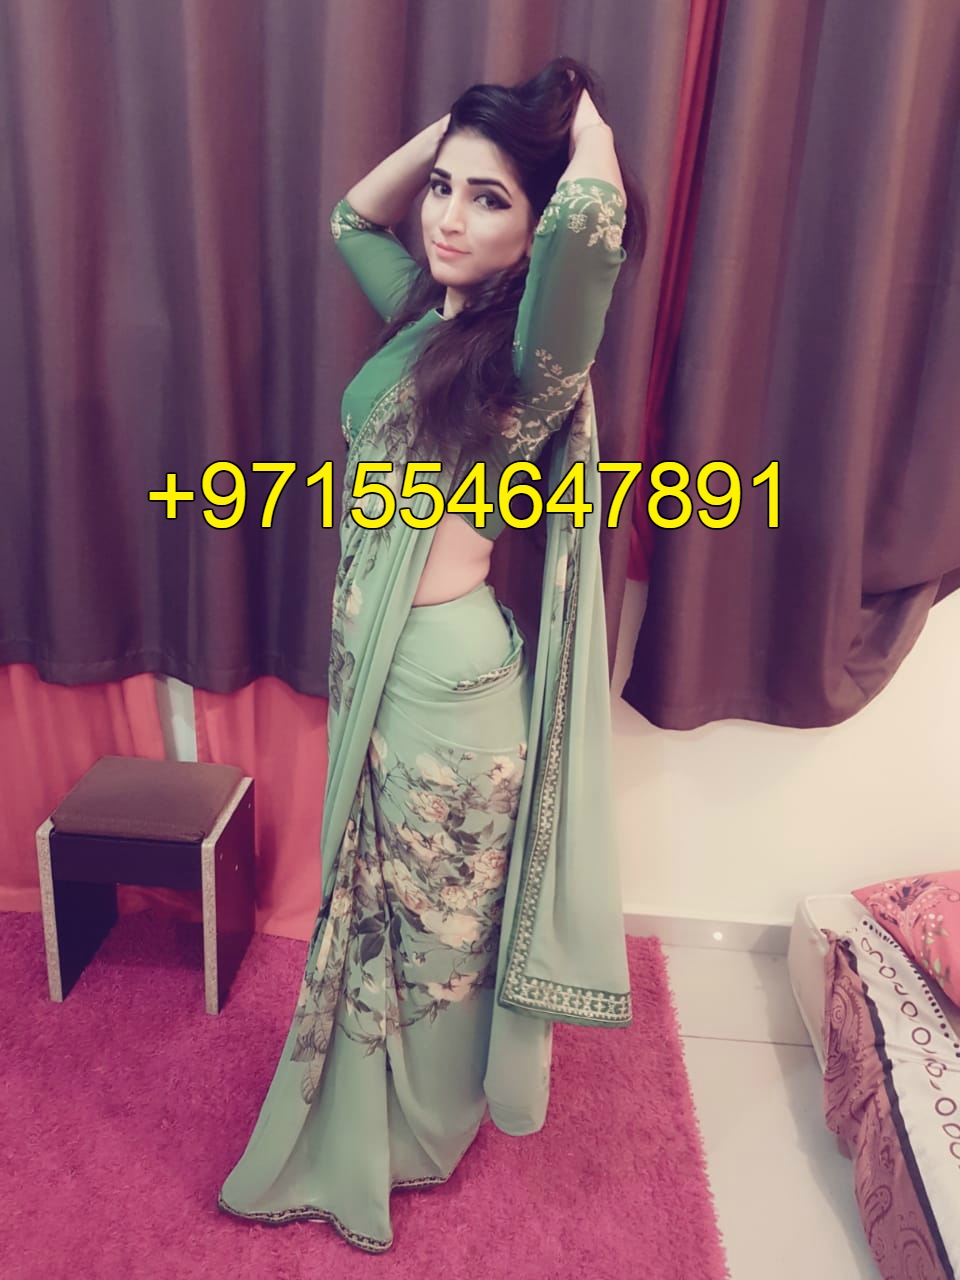 Hot & Sexy Indian Escorts in Dubai +971554647891 || Dubai Escorts 